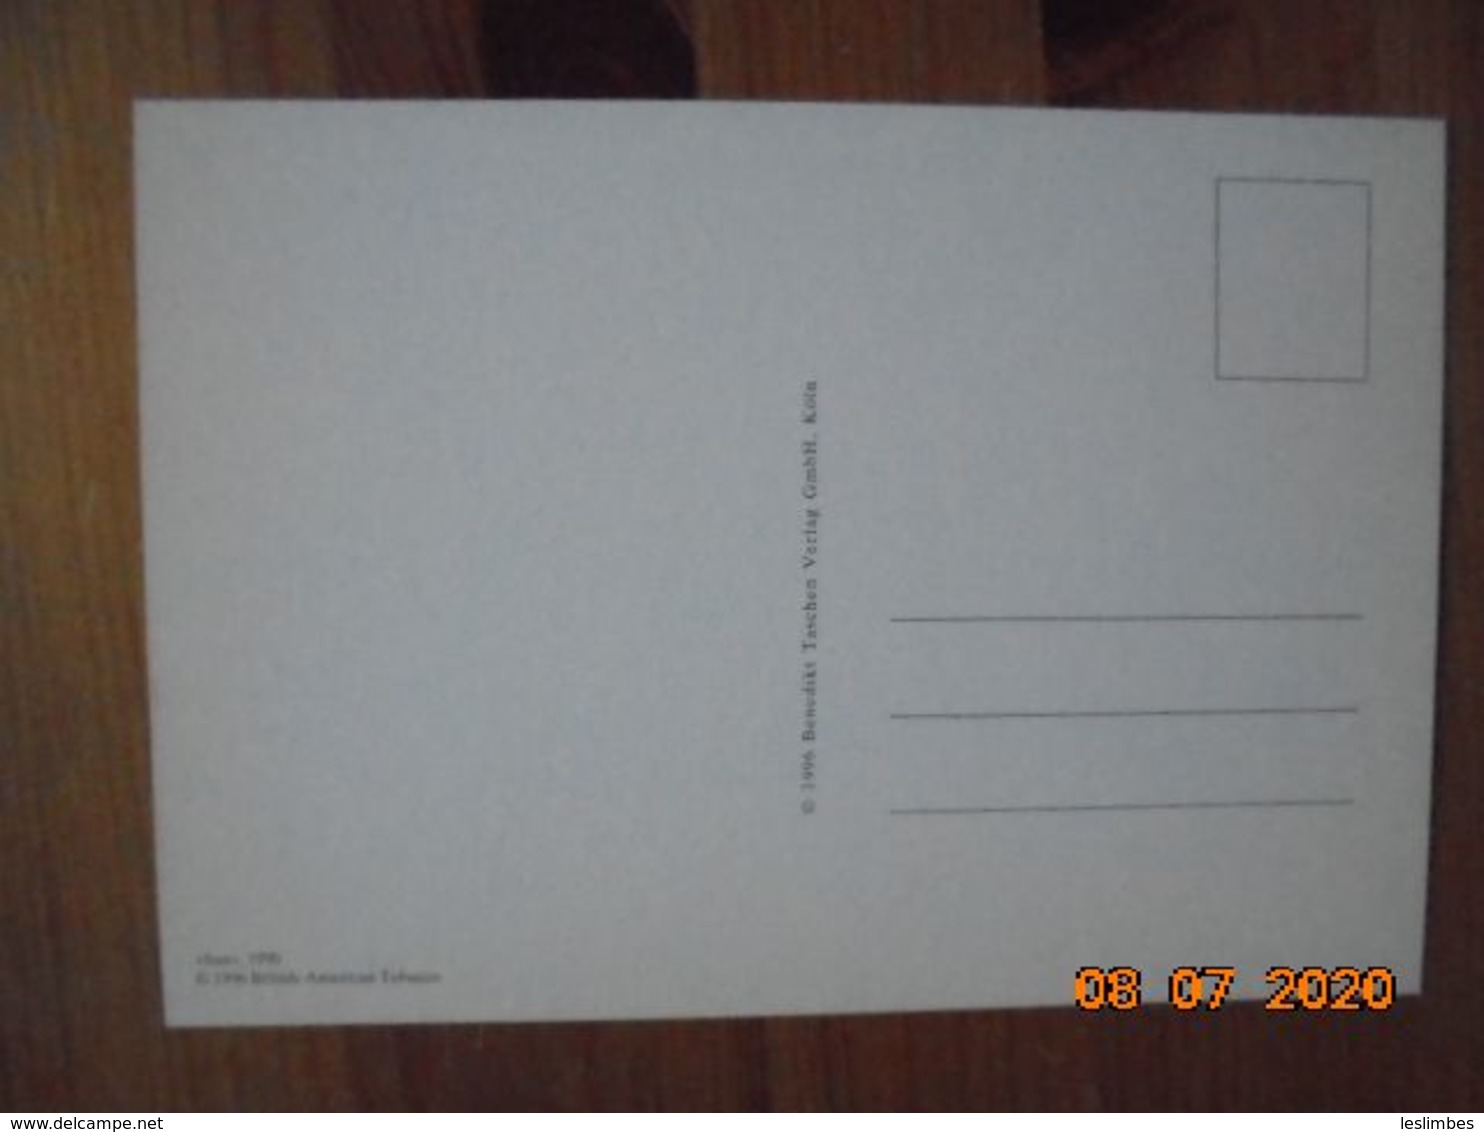 Carte Postale Publicitaire Allemand (Taschen 1996) 16,3 X 11,4 Cm. Lucky Strike. Sonst Nichts. "Sun" 1990 - Objets Publicitaires